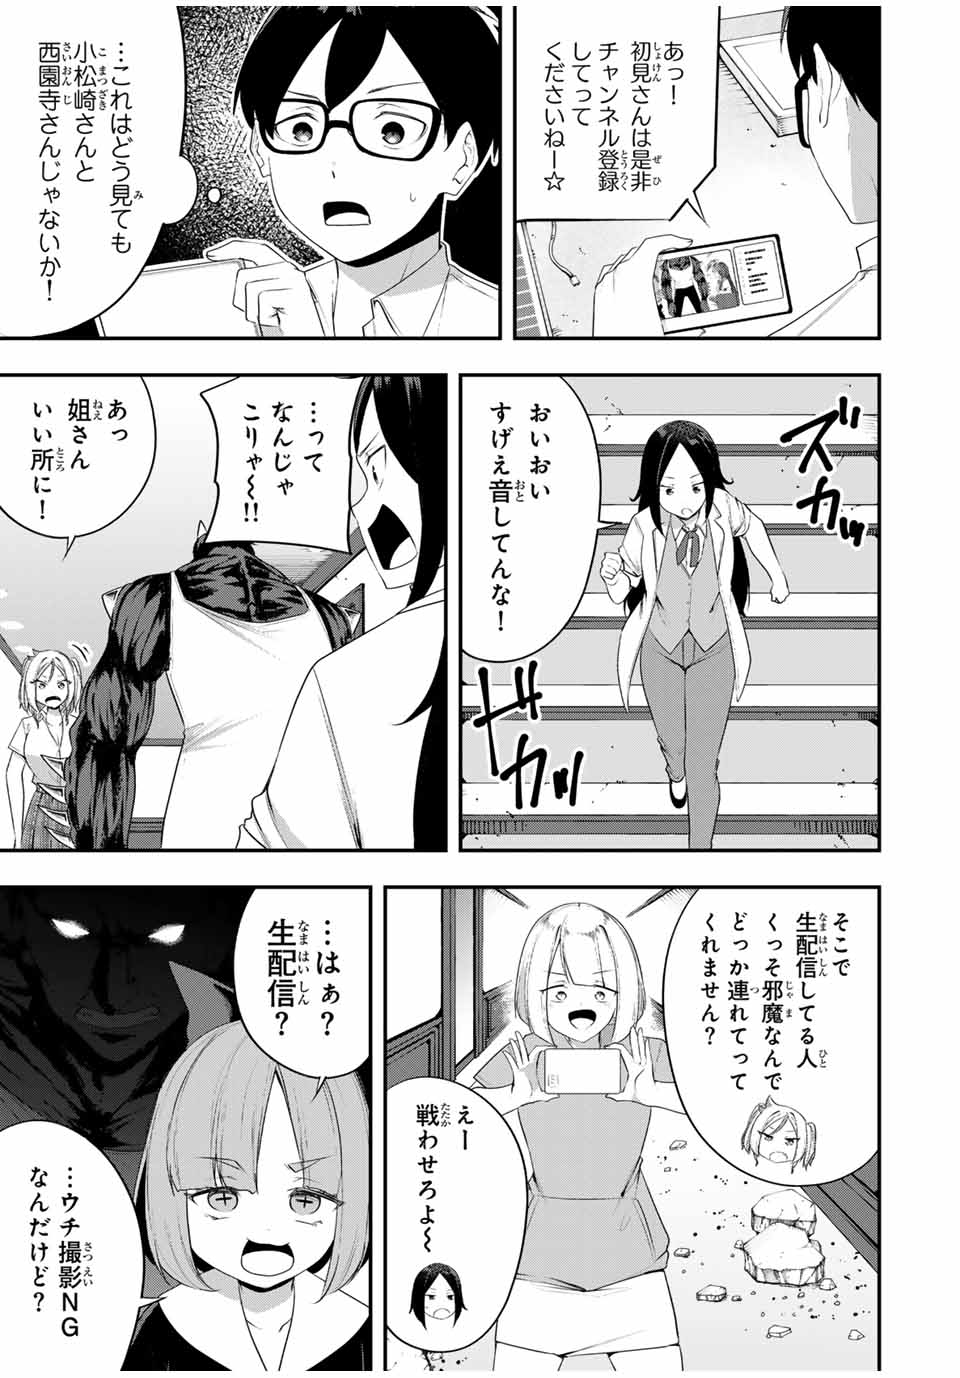 Heroine wa xx Okasegitai - Chapter 14 - Page 15